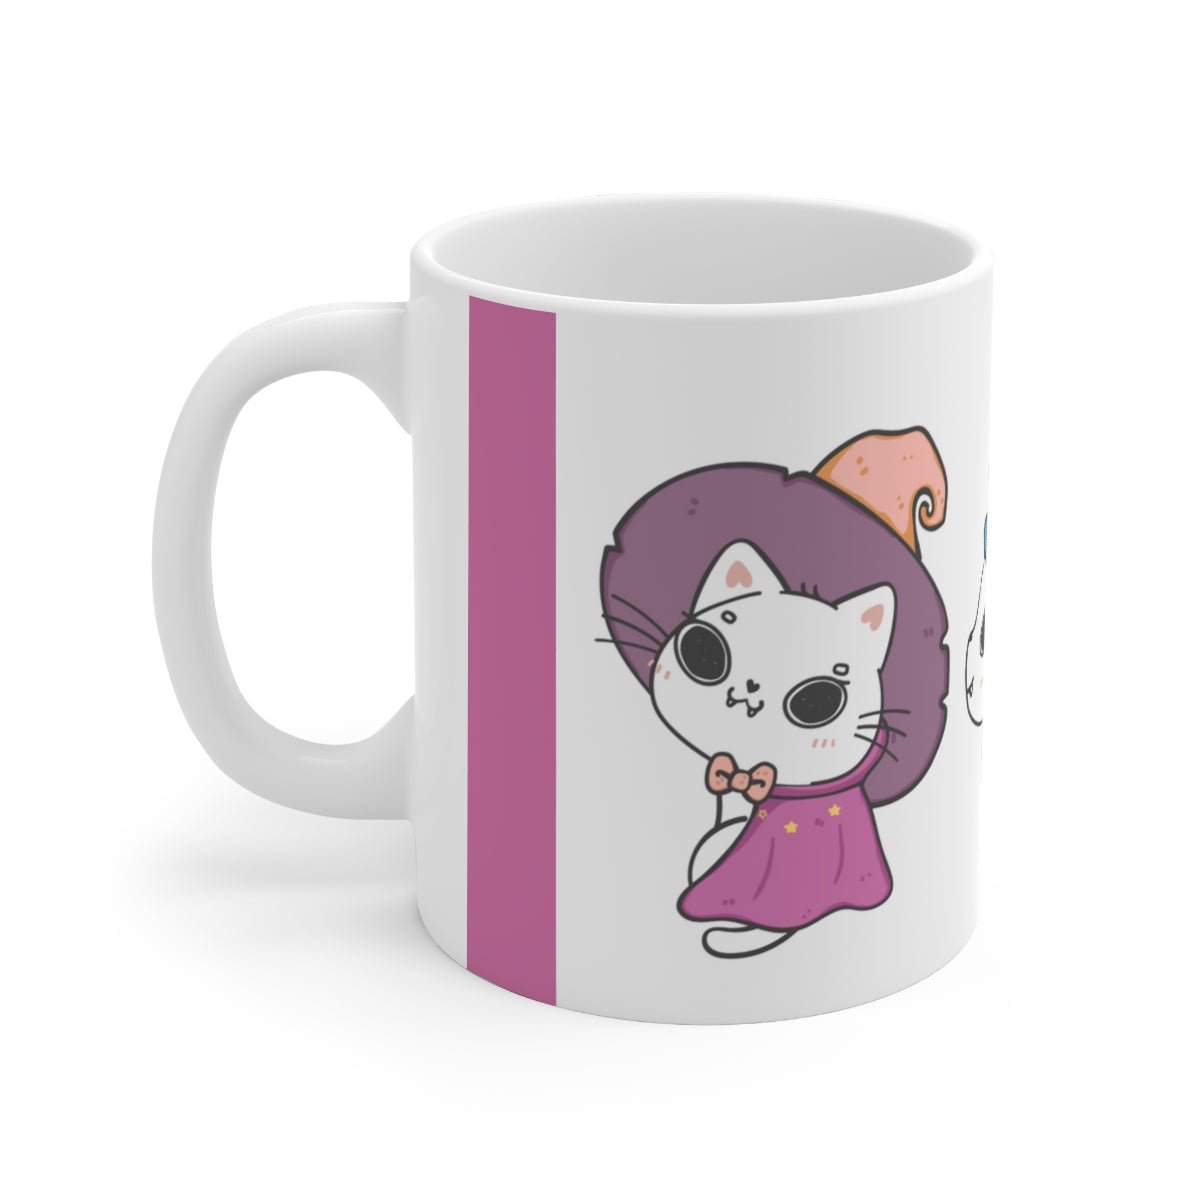 Ceramic Mug 11oz, Cat Mug, Gift for Cat Lovers